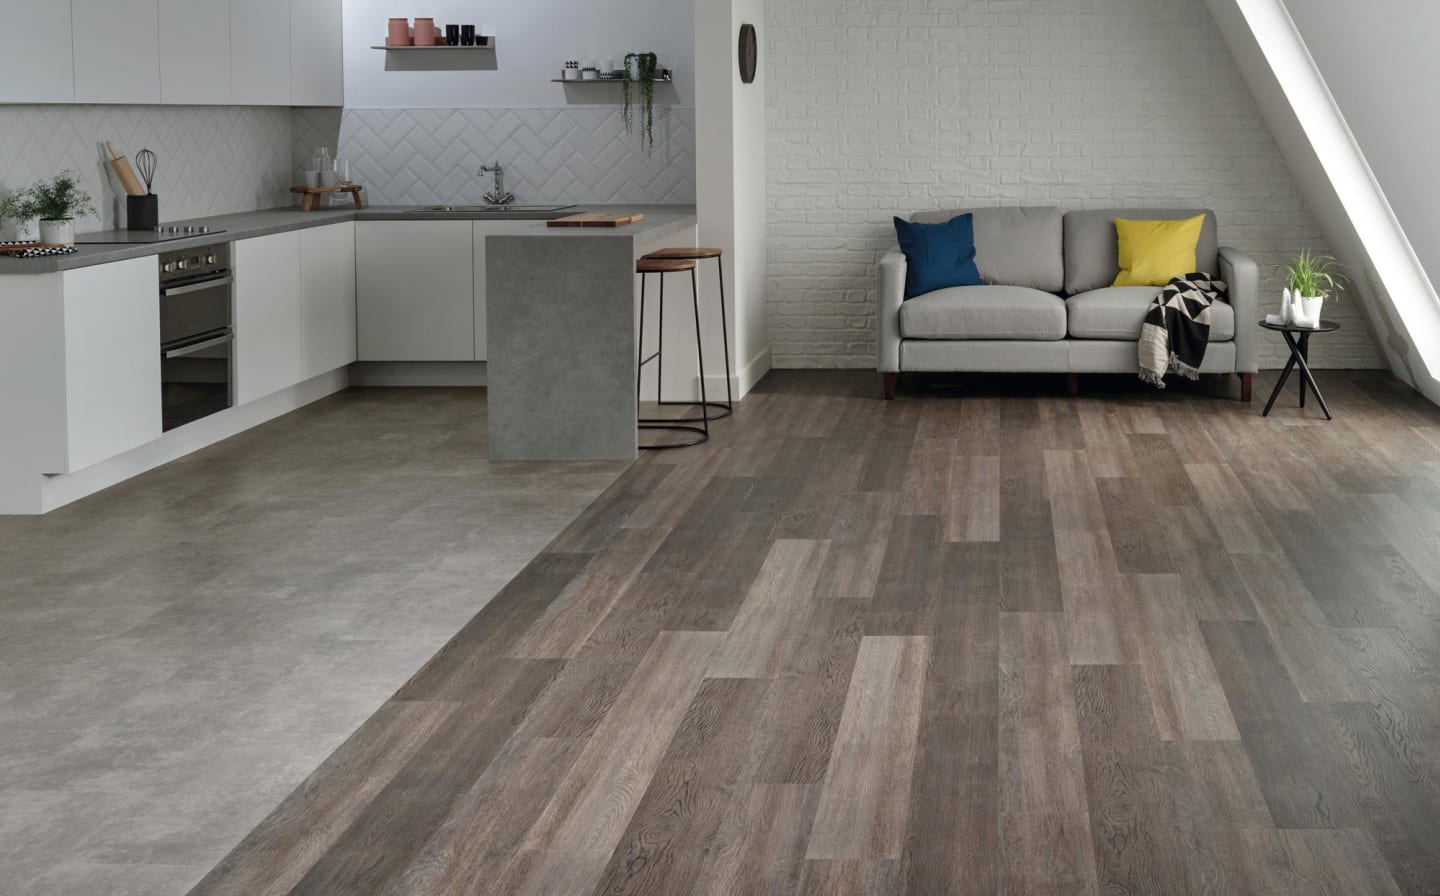 Pale concrete effect flooring in an open plan kitchen next to dark oak effect flooring in a living area